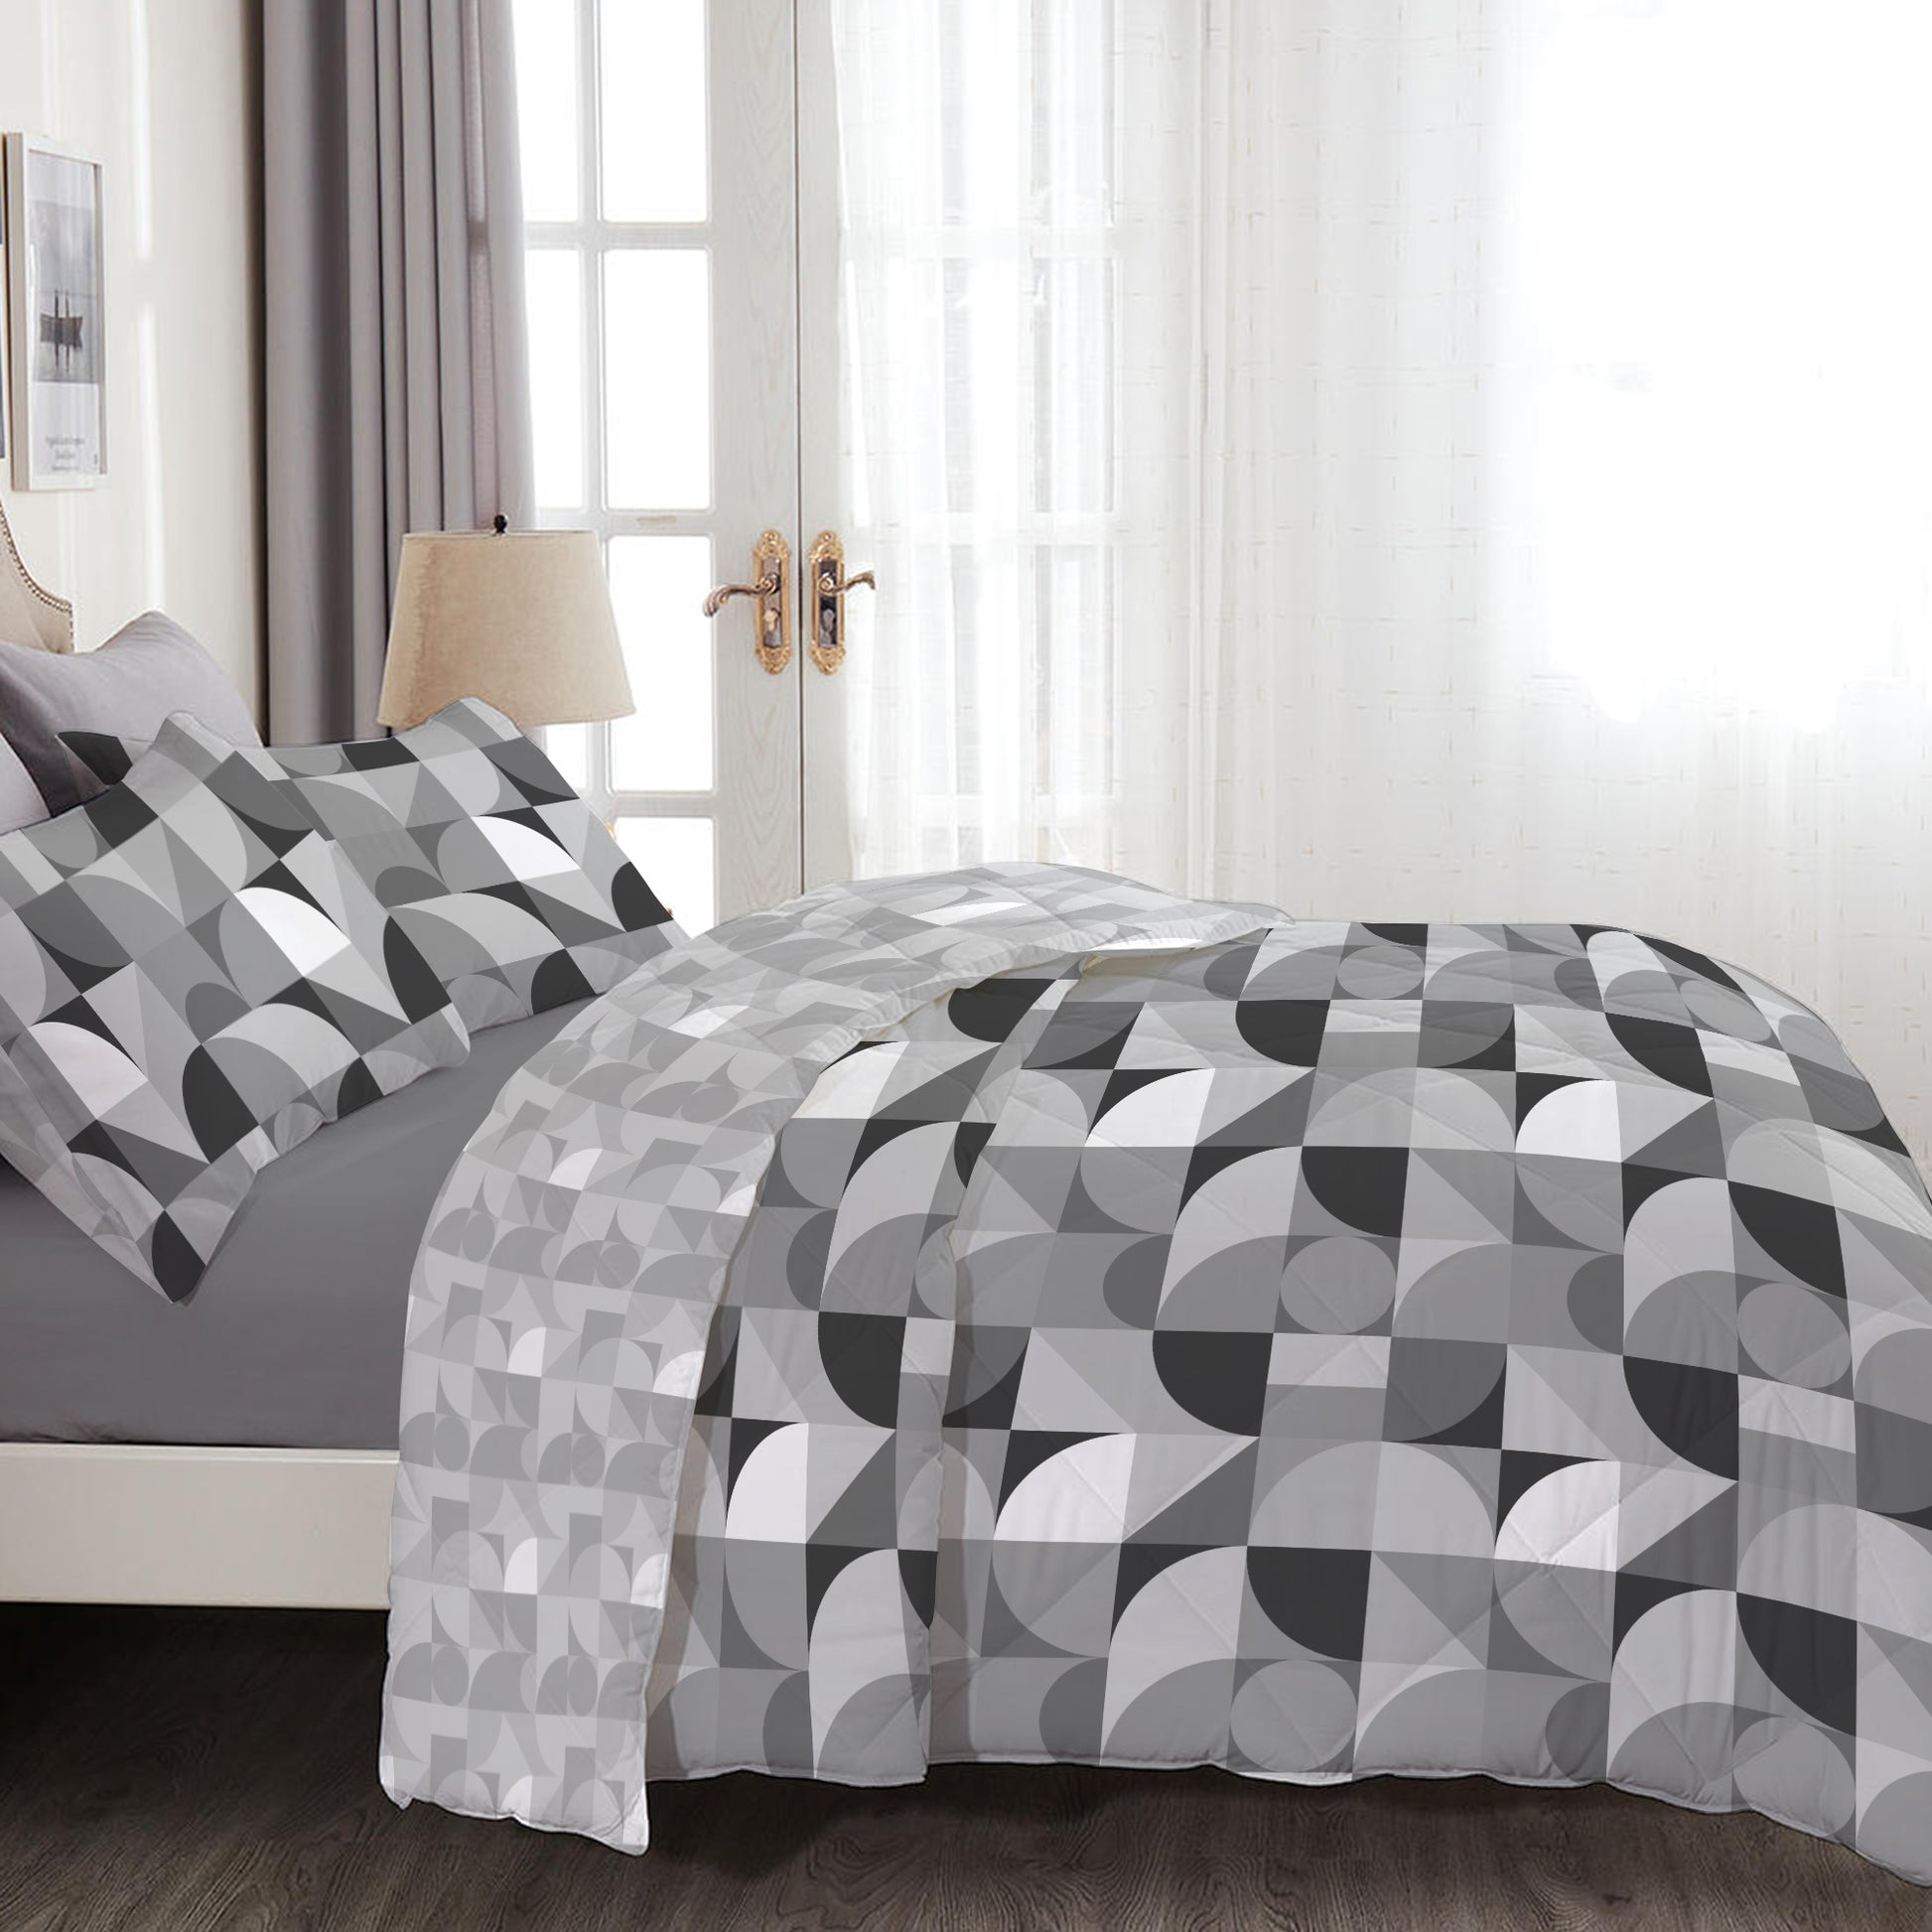 4-Piece Luxury Cotton Comforter Set Queen/King Size Bauhaus Print Grey